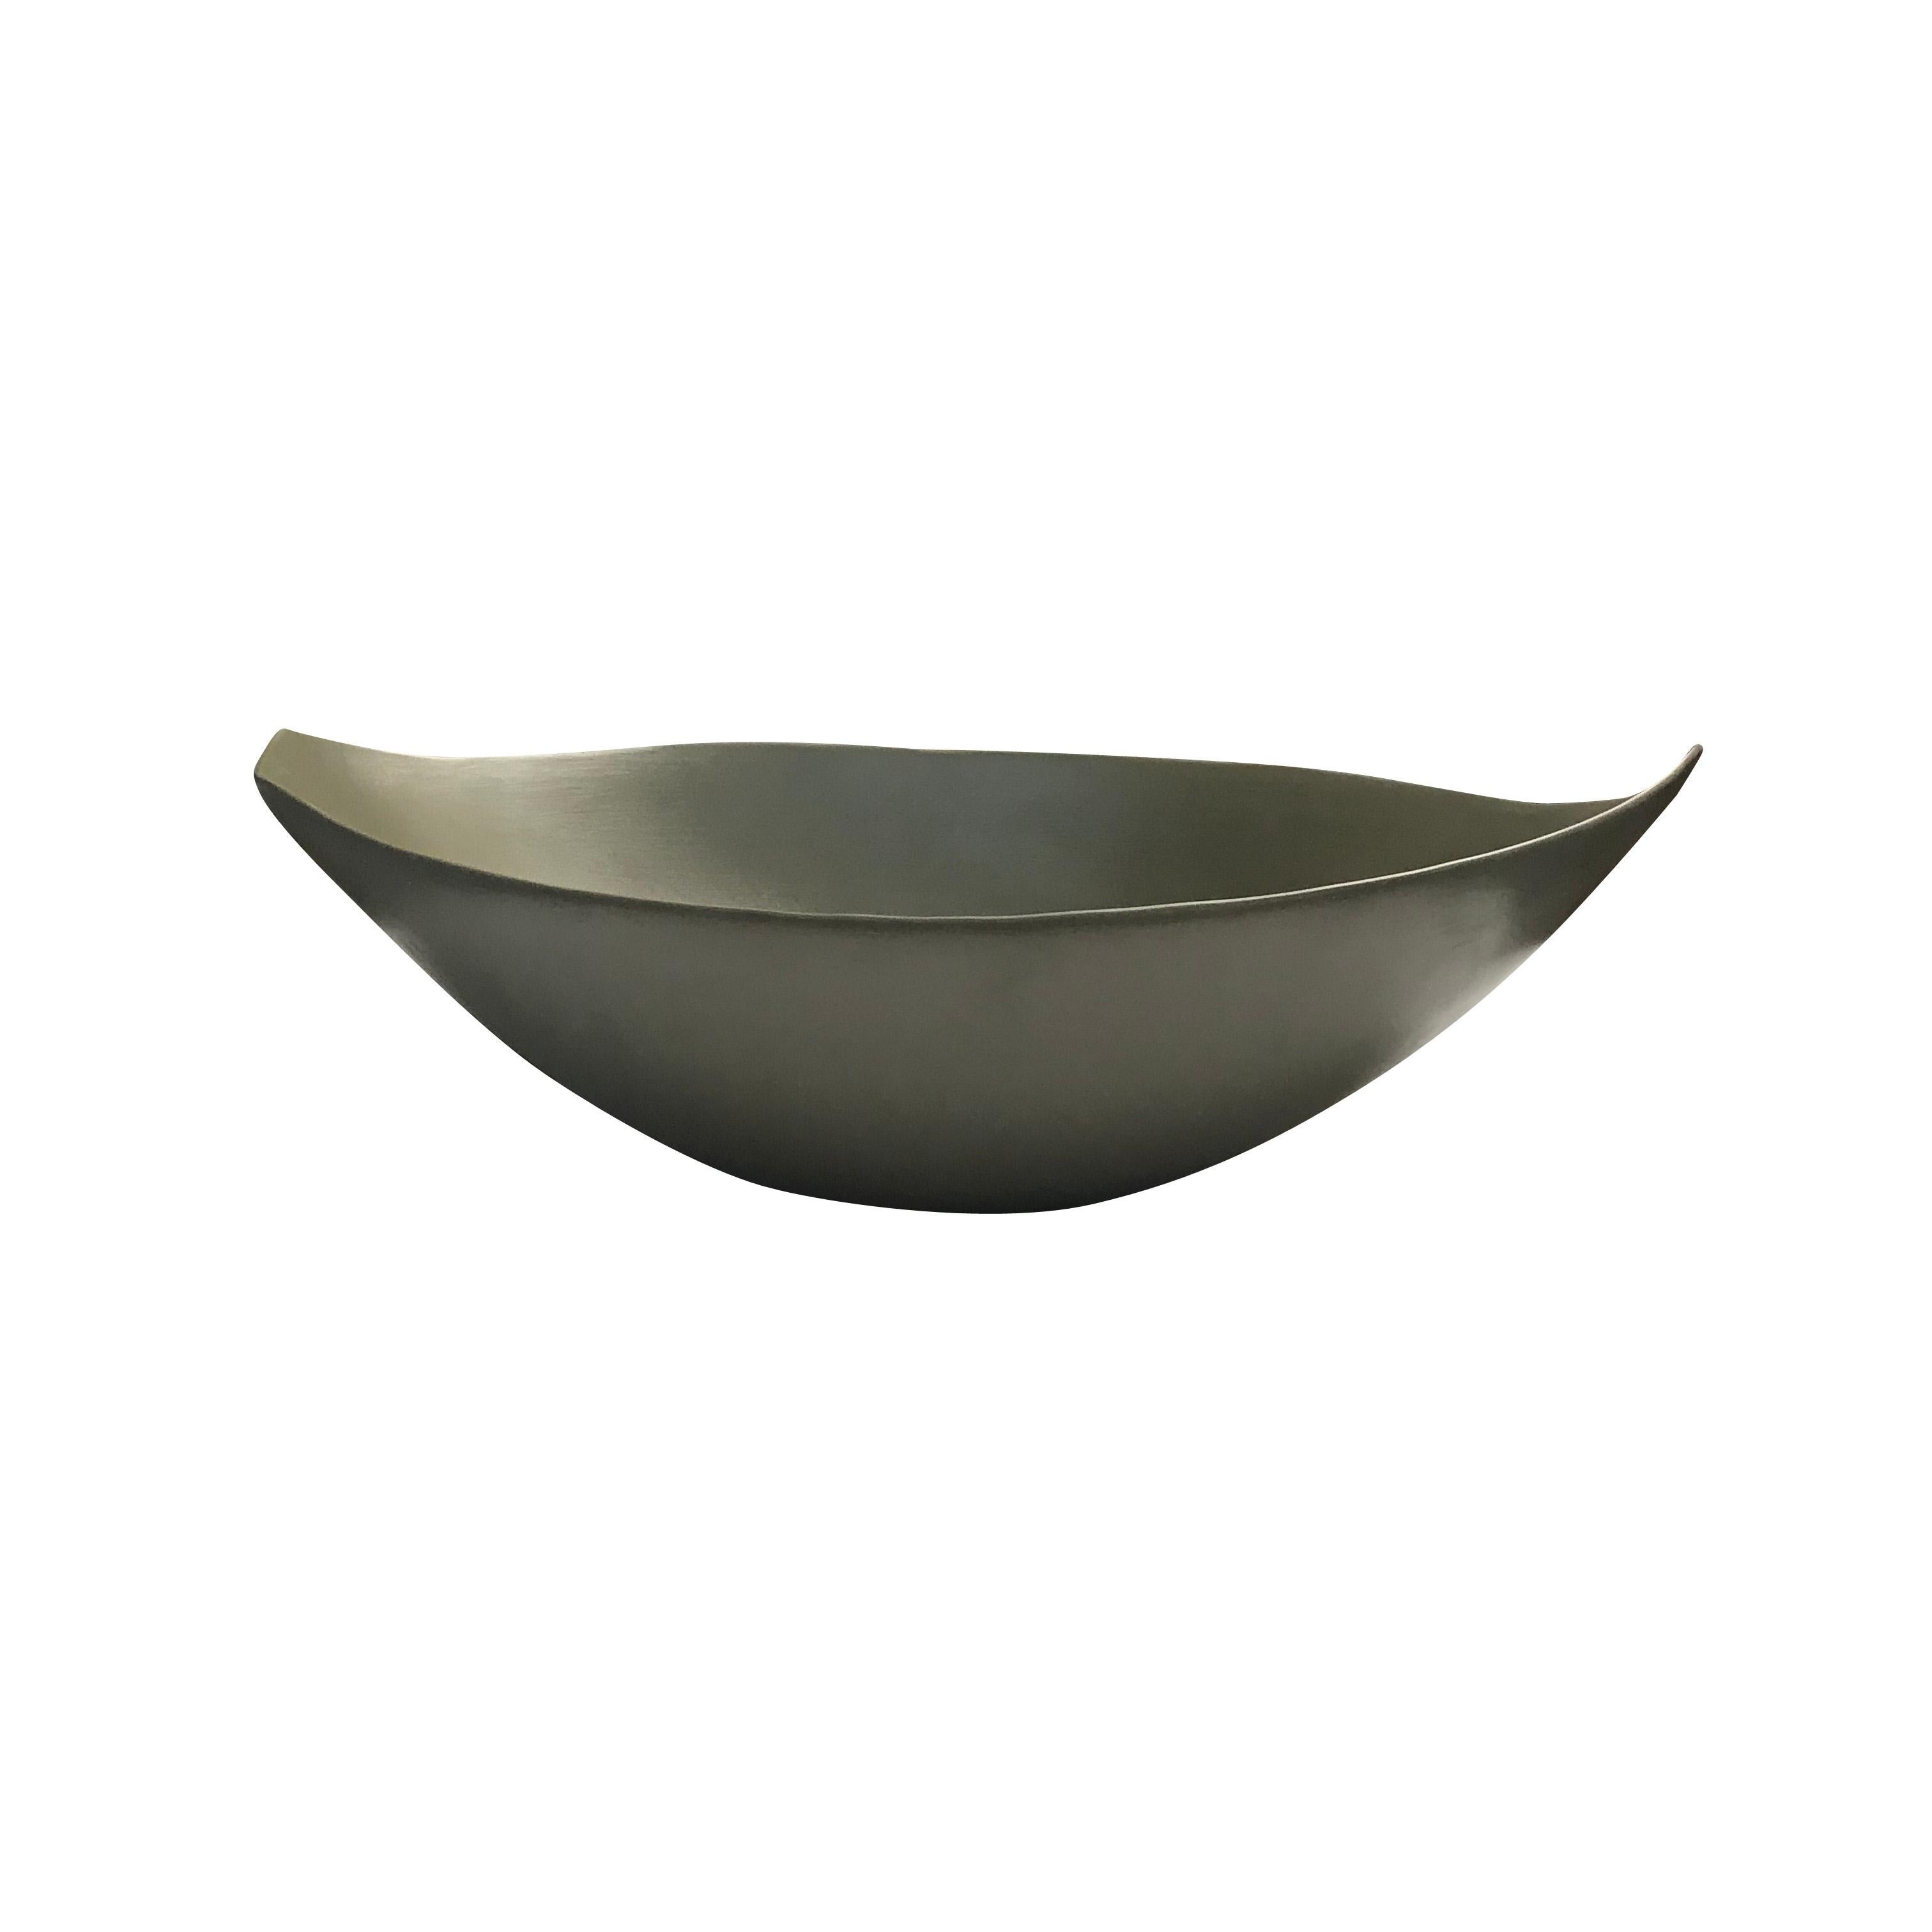 Contemporary Italian large bronze wavy shaped bowl
Handmade
Matte finish / fine ceramic.